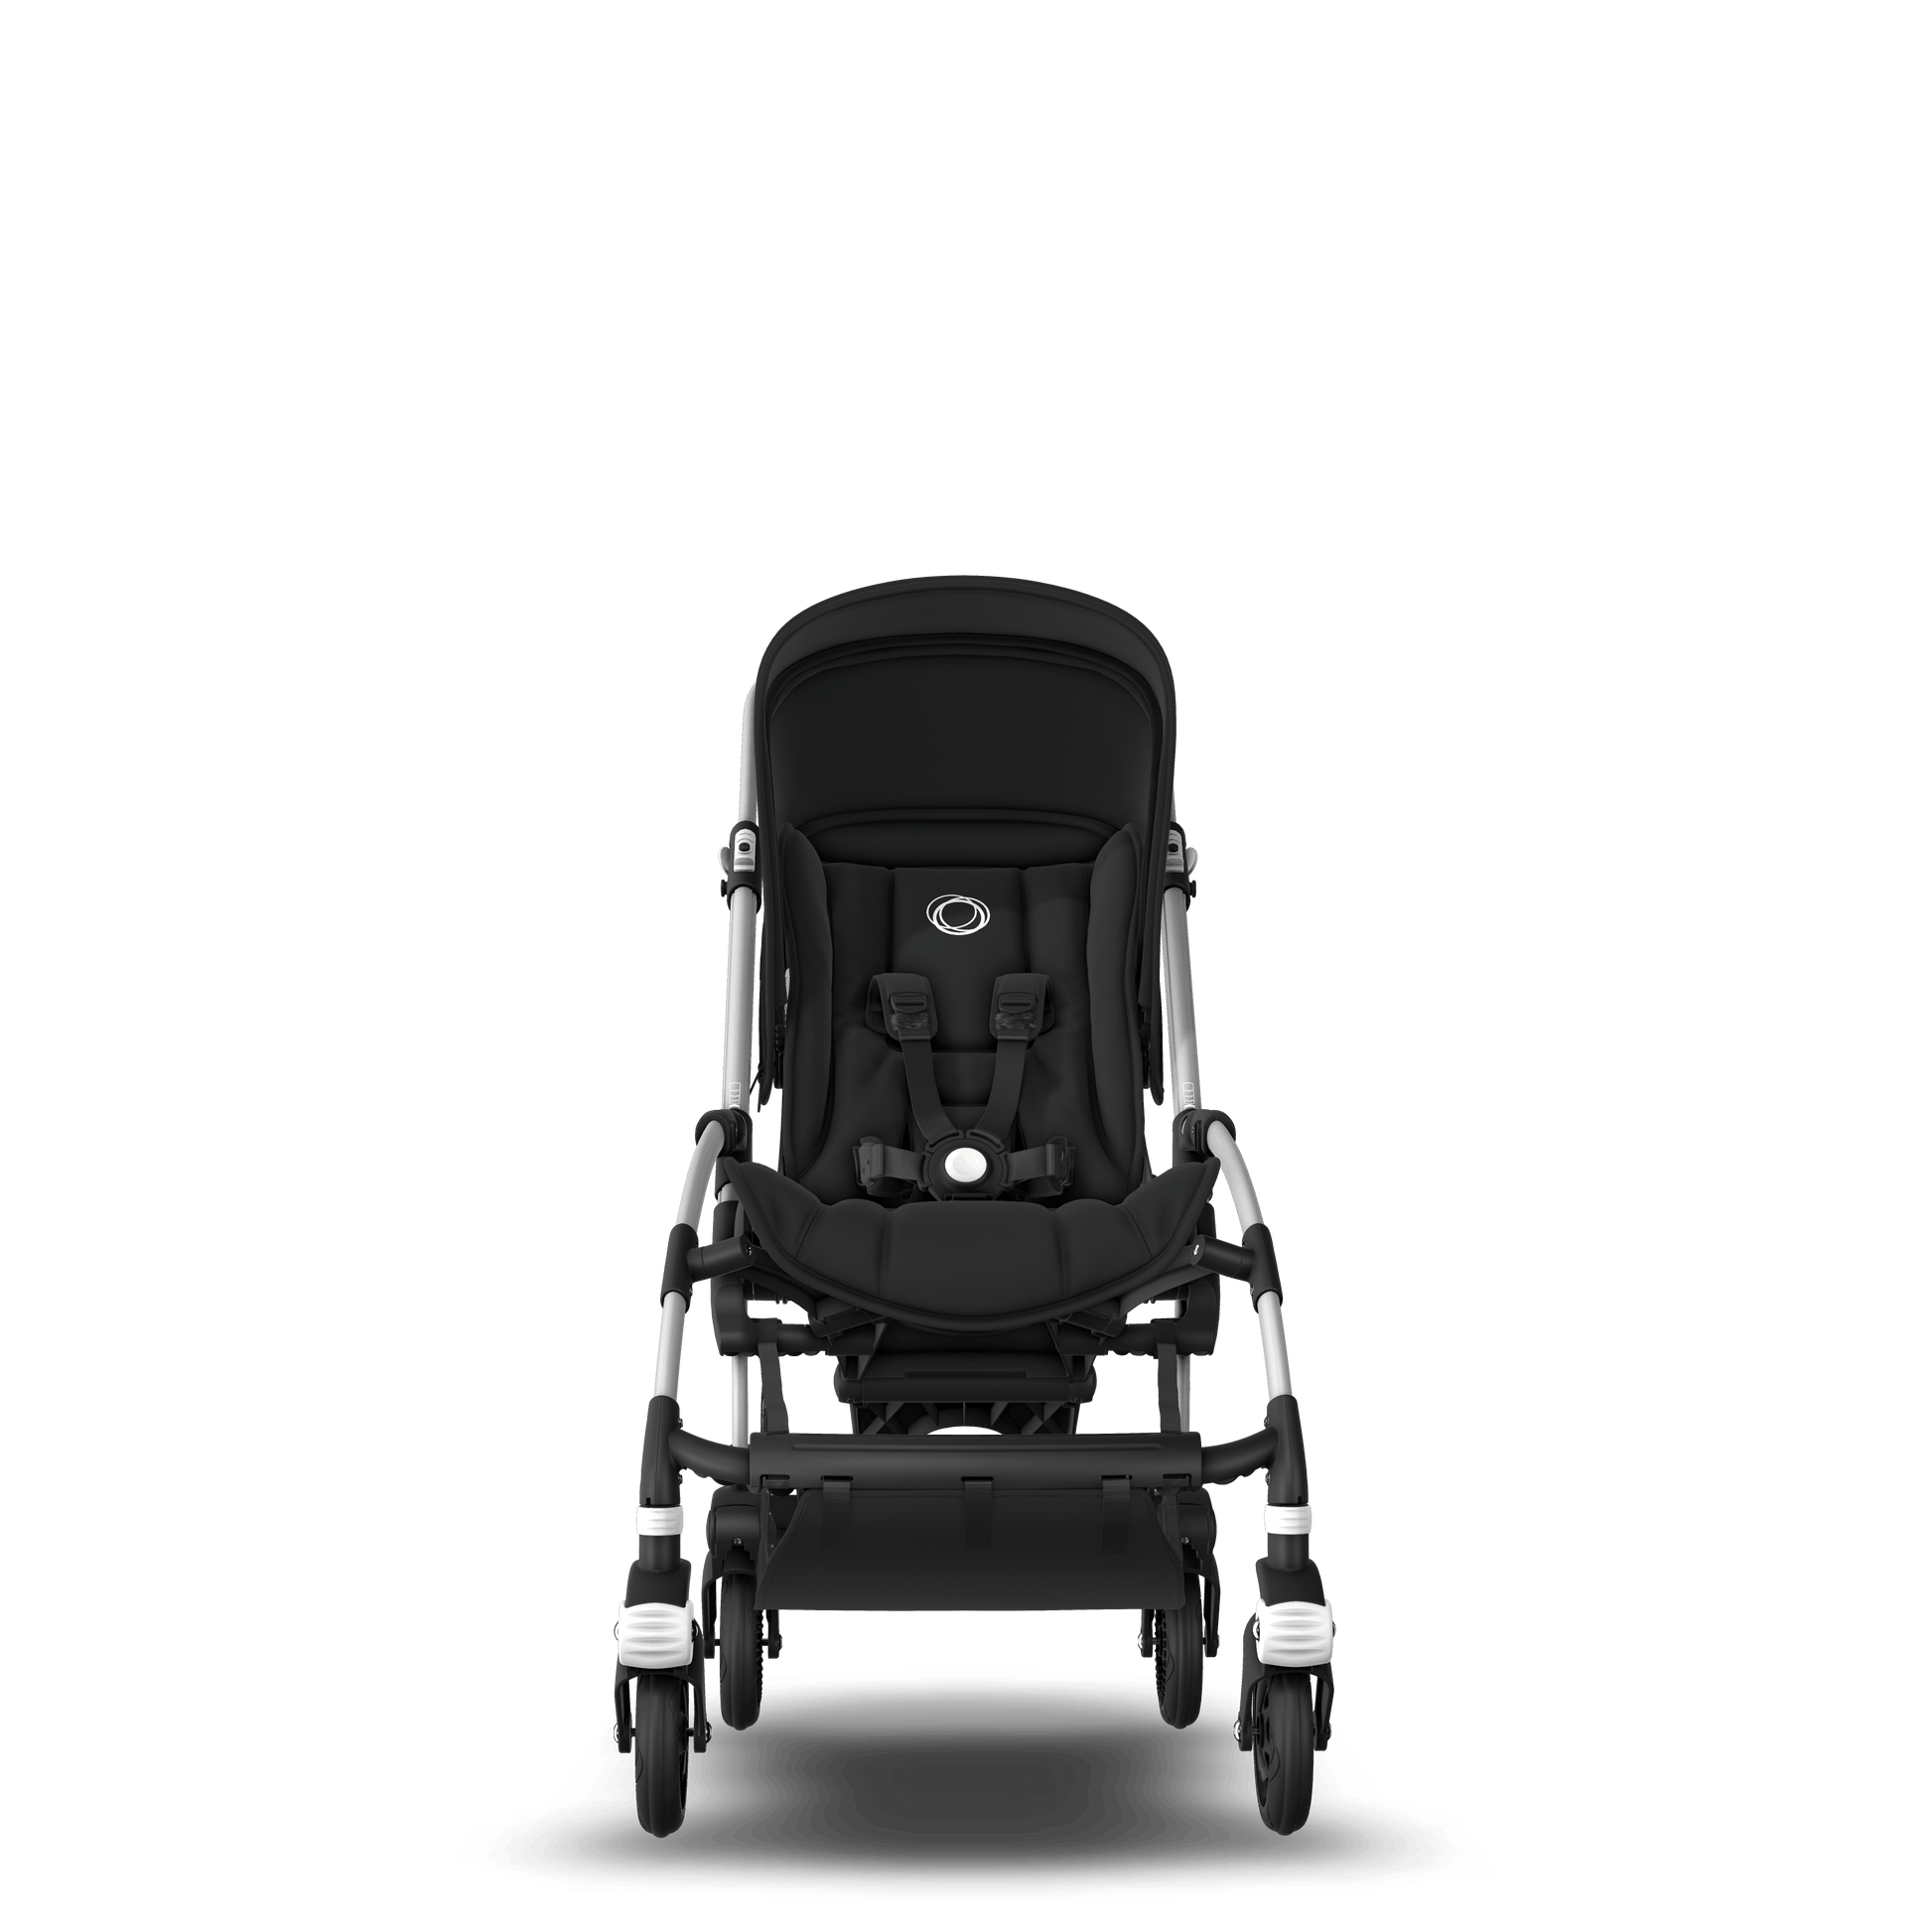 Bugaboo Bee5 Classic Complete Stroller - Black (2+2 Years Warranty) | Little Baby.